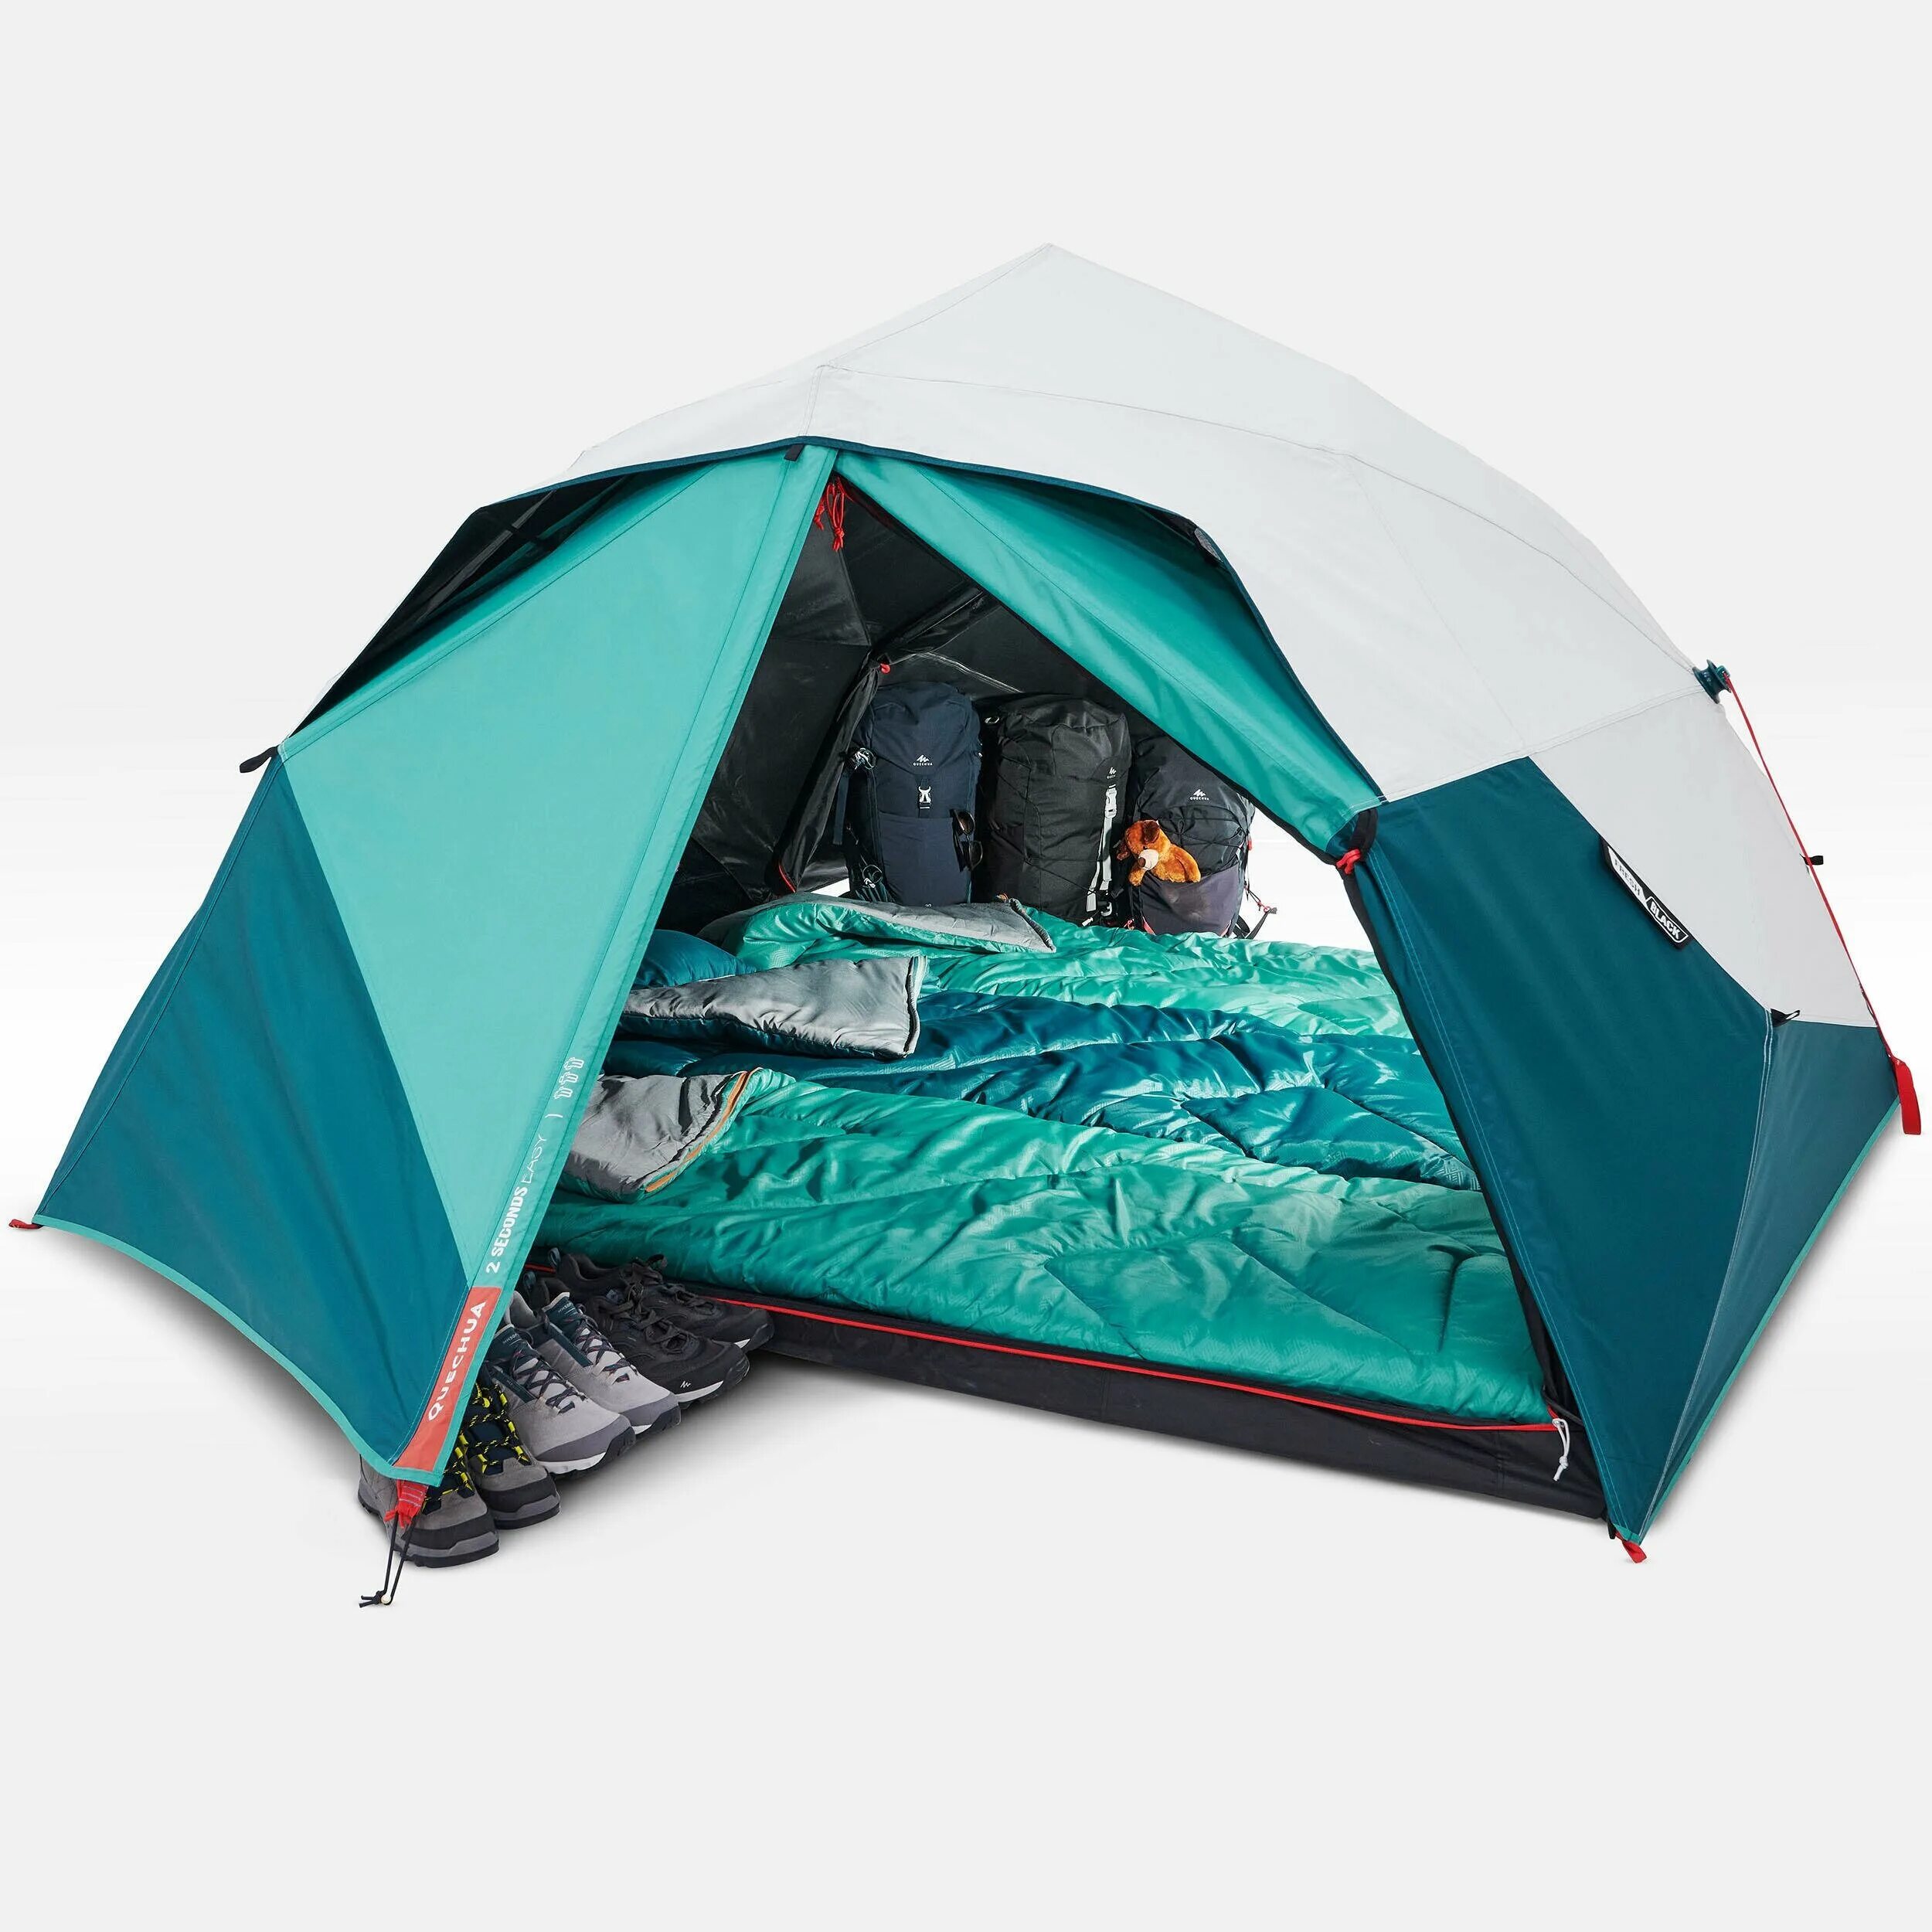 Seconds easy. Палатка трехместная Декатлон. Палатка Fresh and Black. Quechua 2 second easy Fresh & Black Waterproof Pop up Camping Tent 3 person. Палатка Блэк энд Фреш 3 местная.